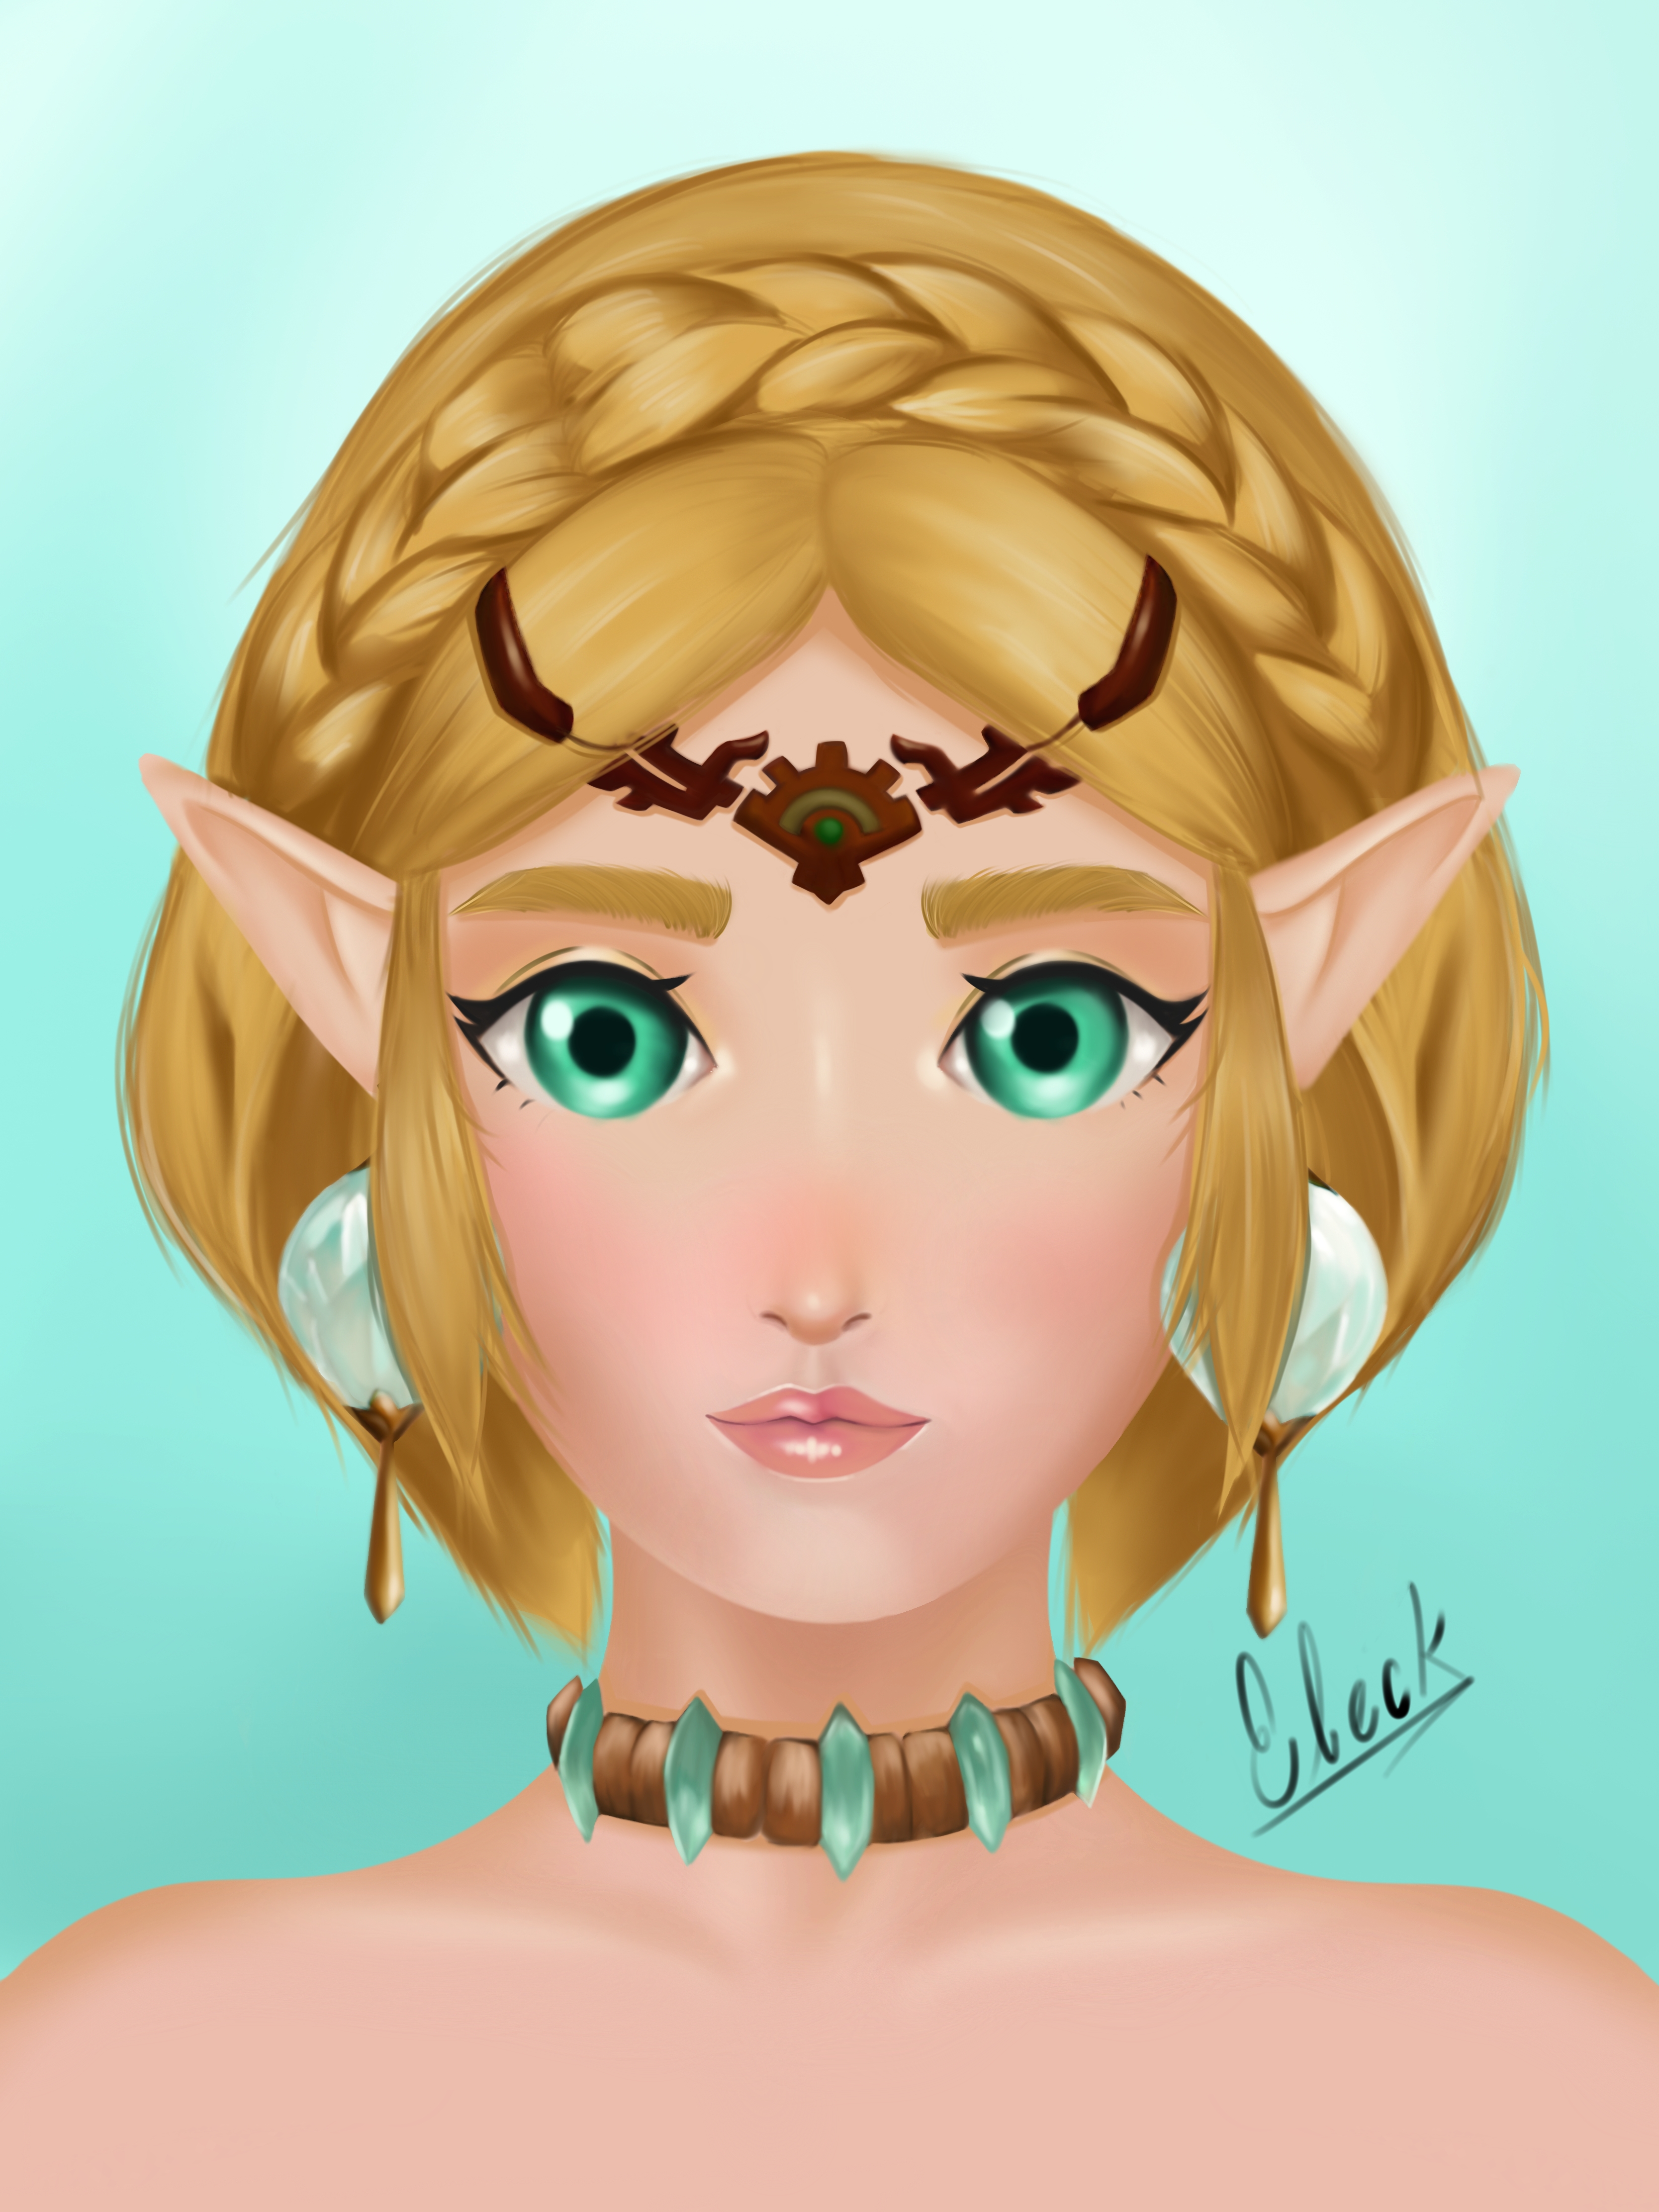 Link from Zelda Wallpaper by Sennexx on DeviantArt